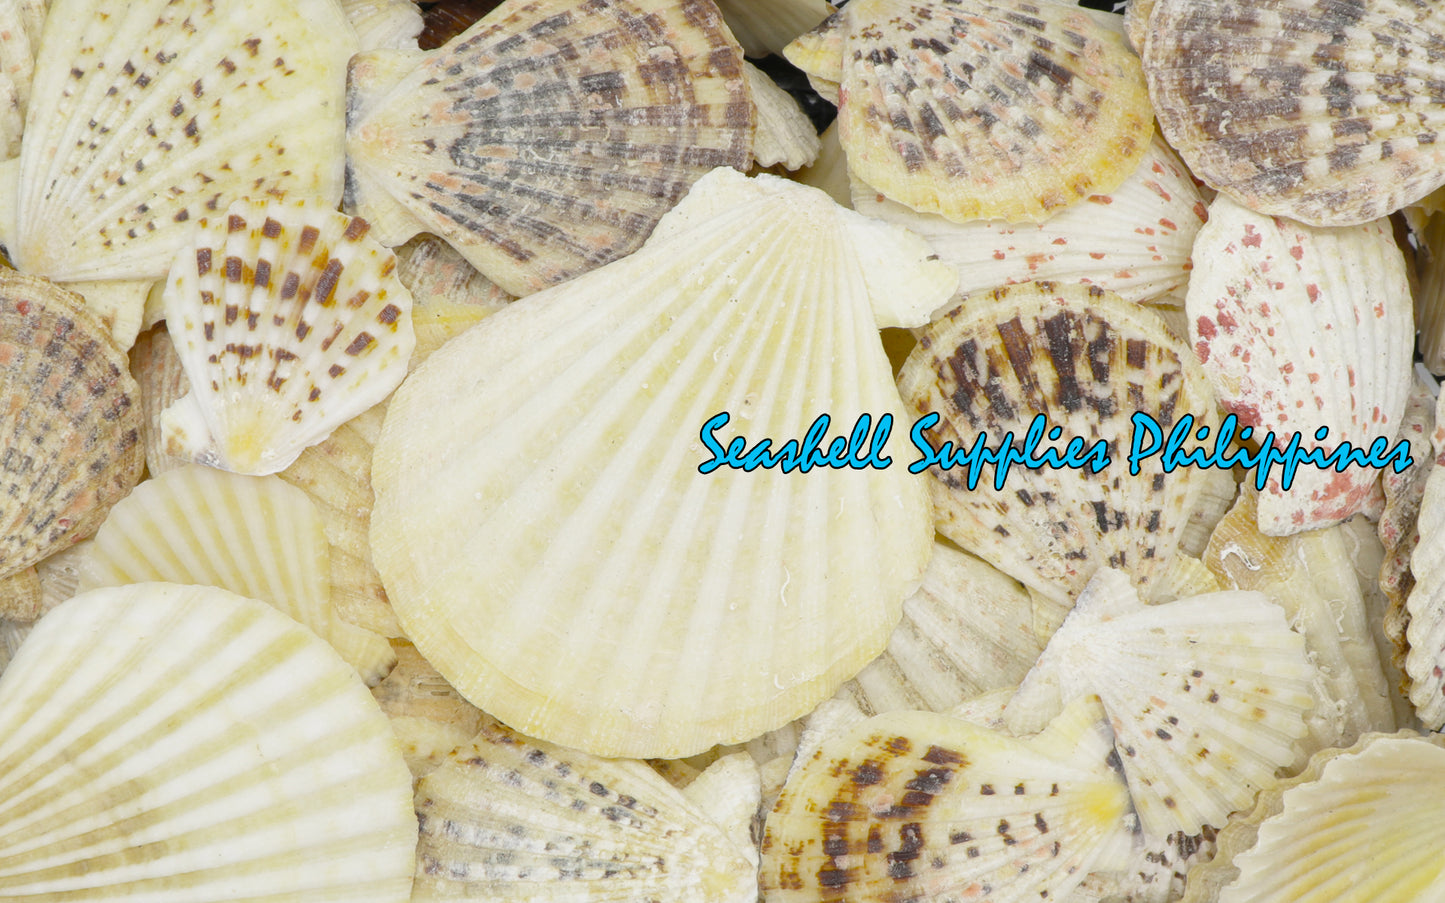 1 Kilo | Pecten Radiola | Radula Scallop | Seashells | Sea shells